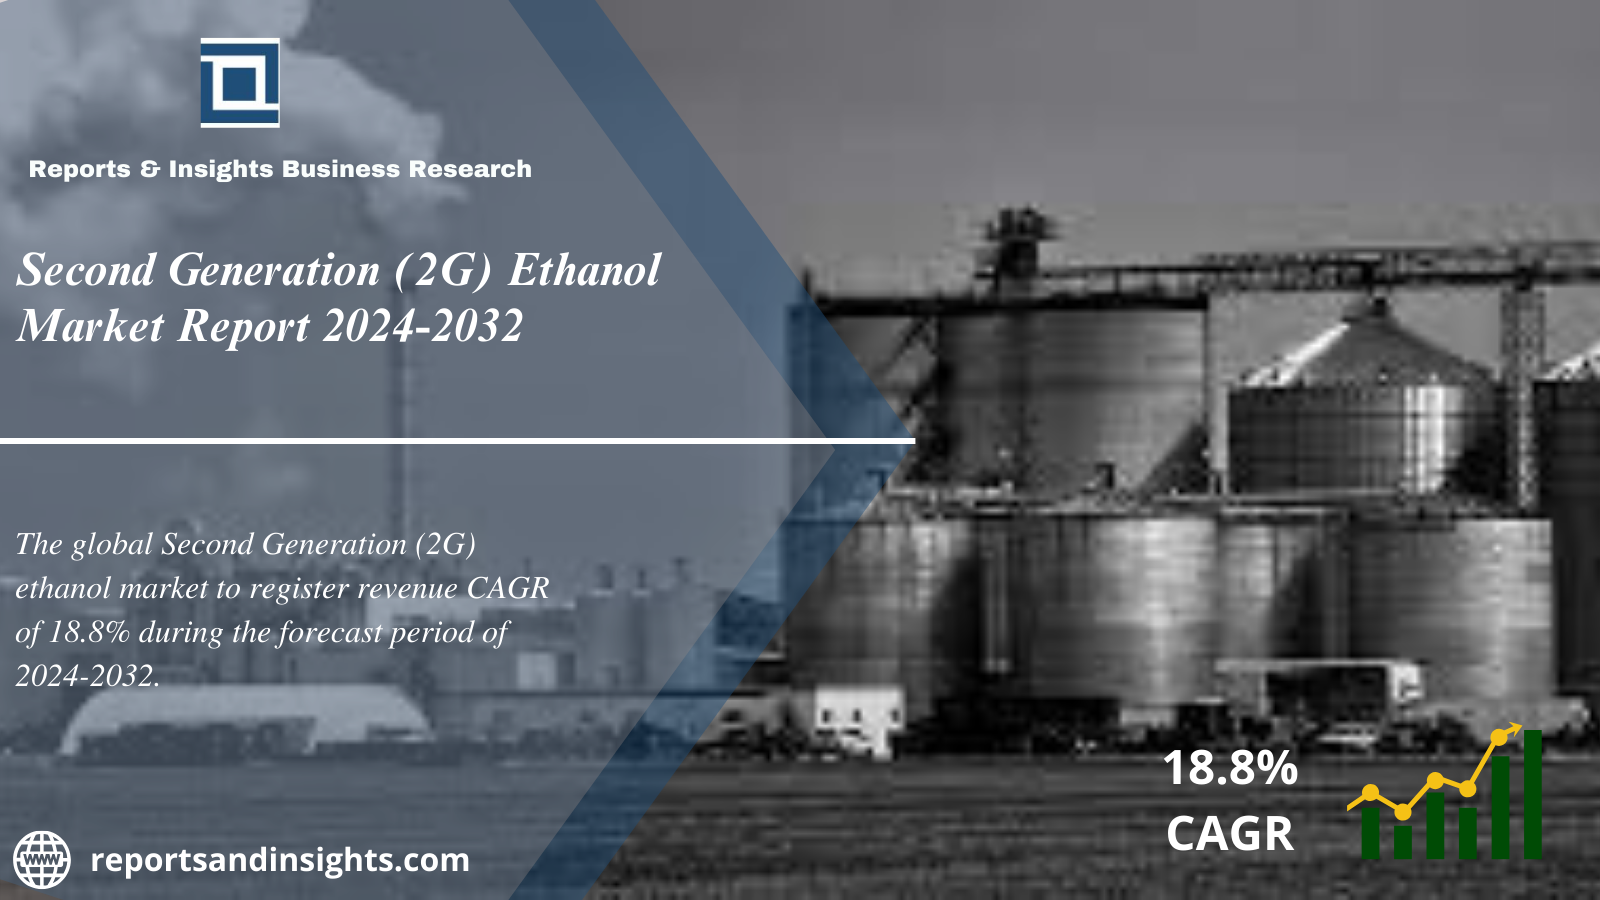 Second Generation (2G) Ethanol Market Analysis Report